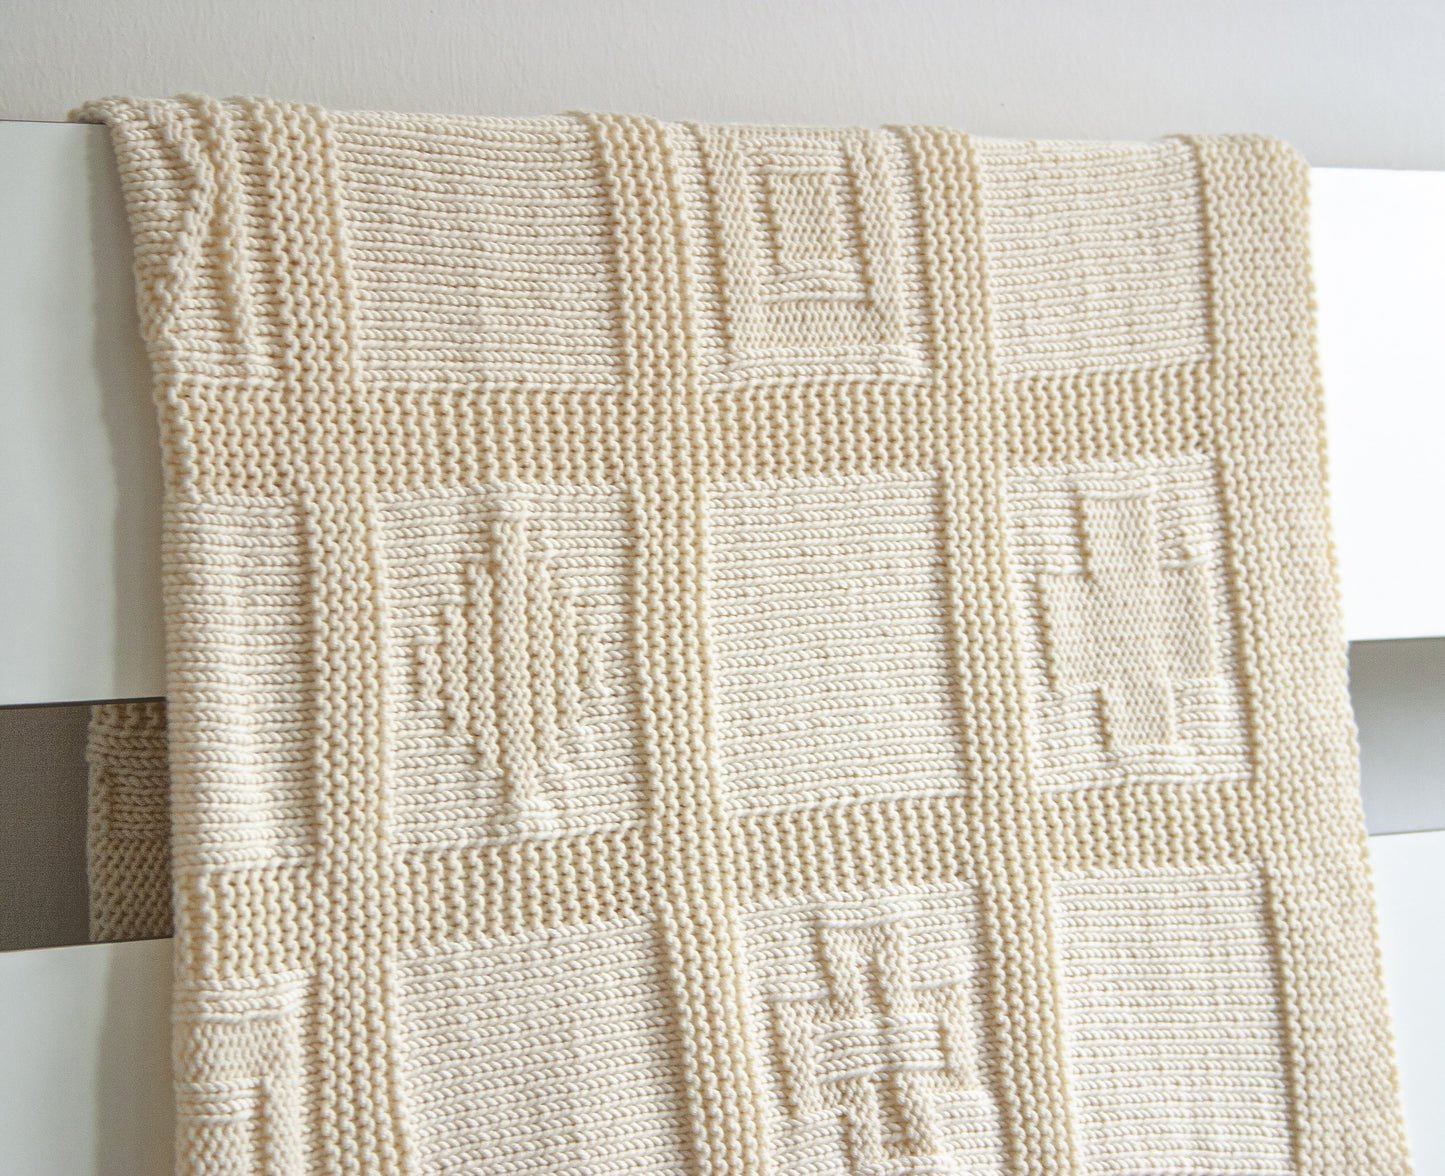 white merino wool hand-knitted baby blanket in geometric knitting pattern